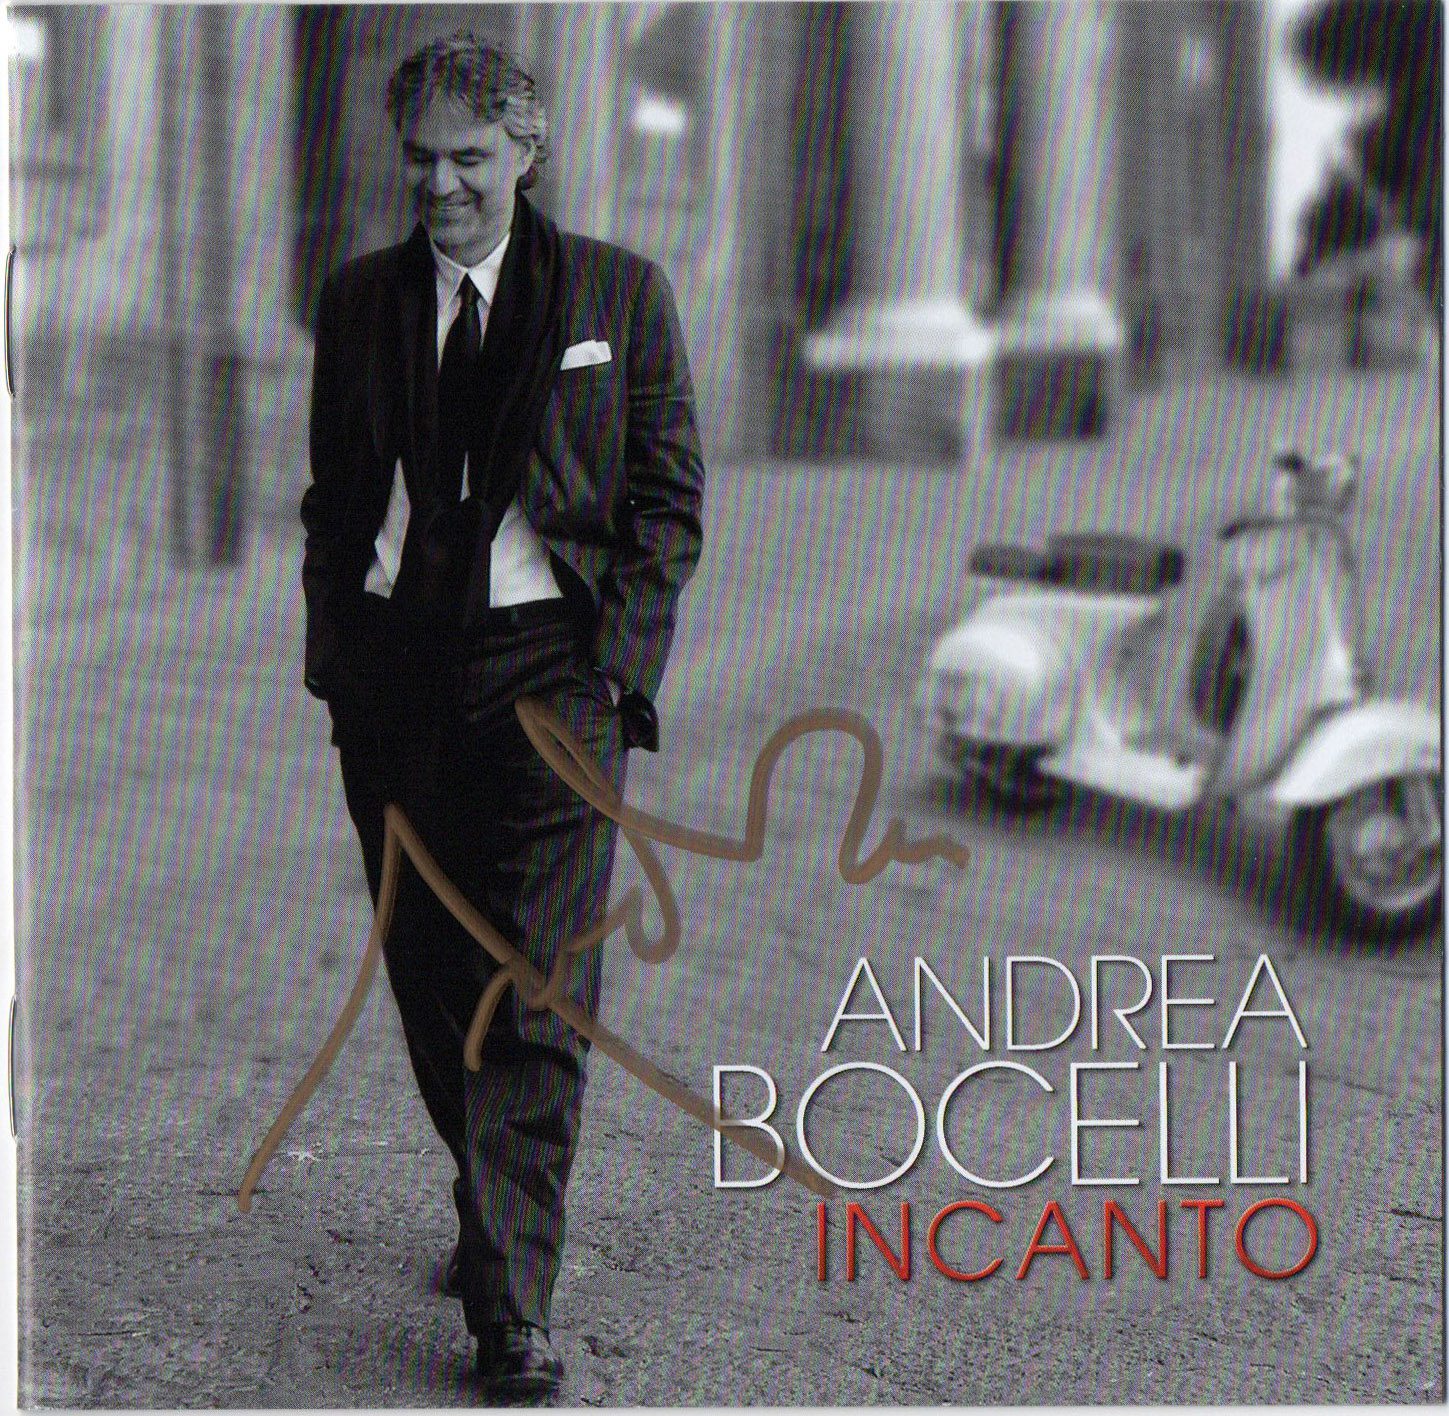 Amos Bocelli - Bio, Facts, Family Life of Andrea Bocelli's Son